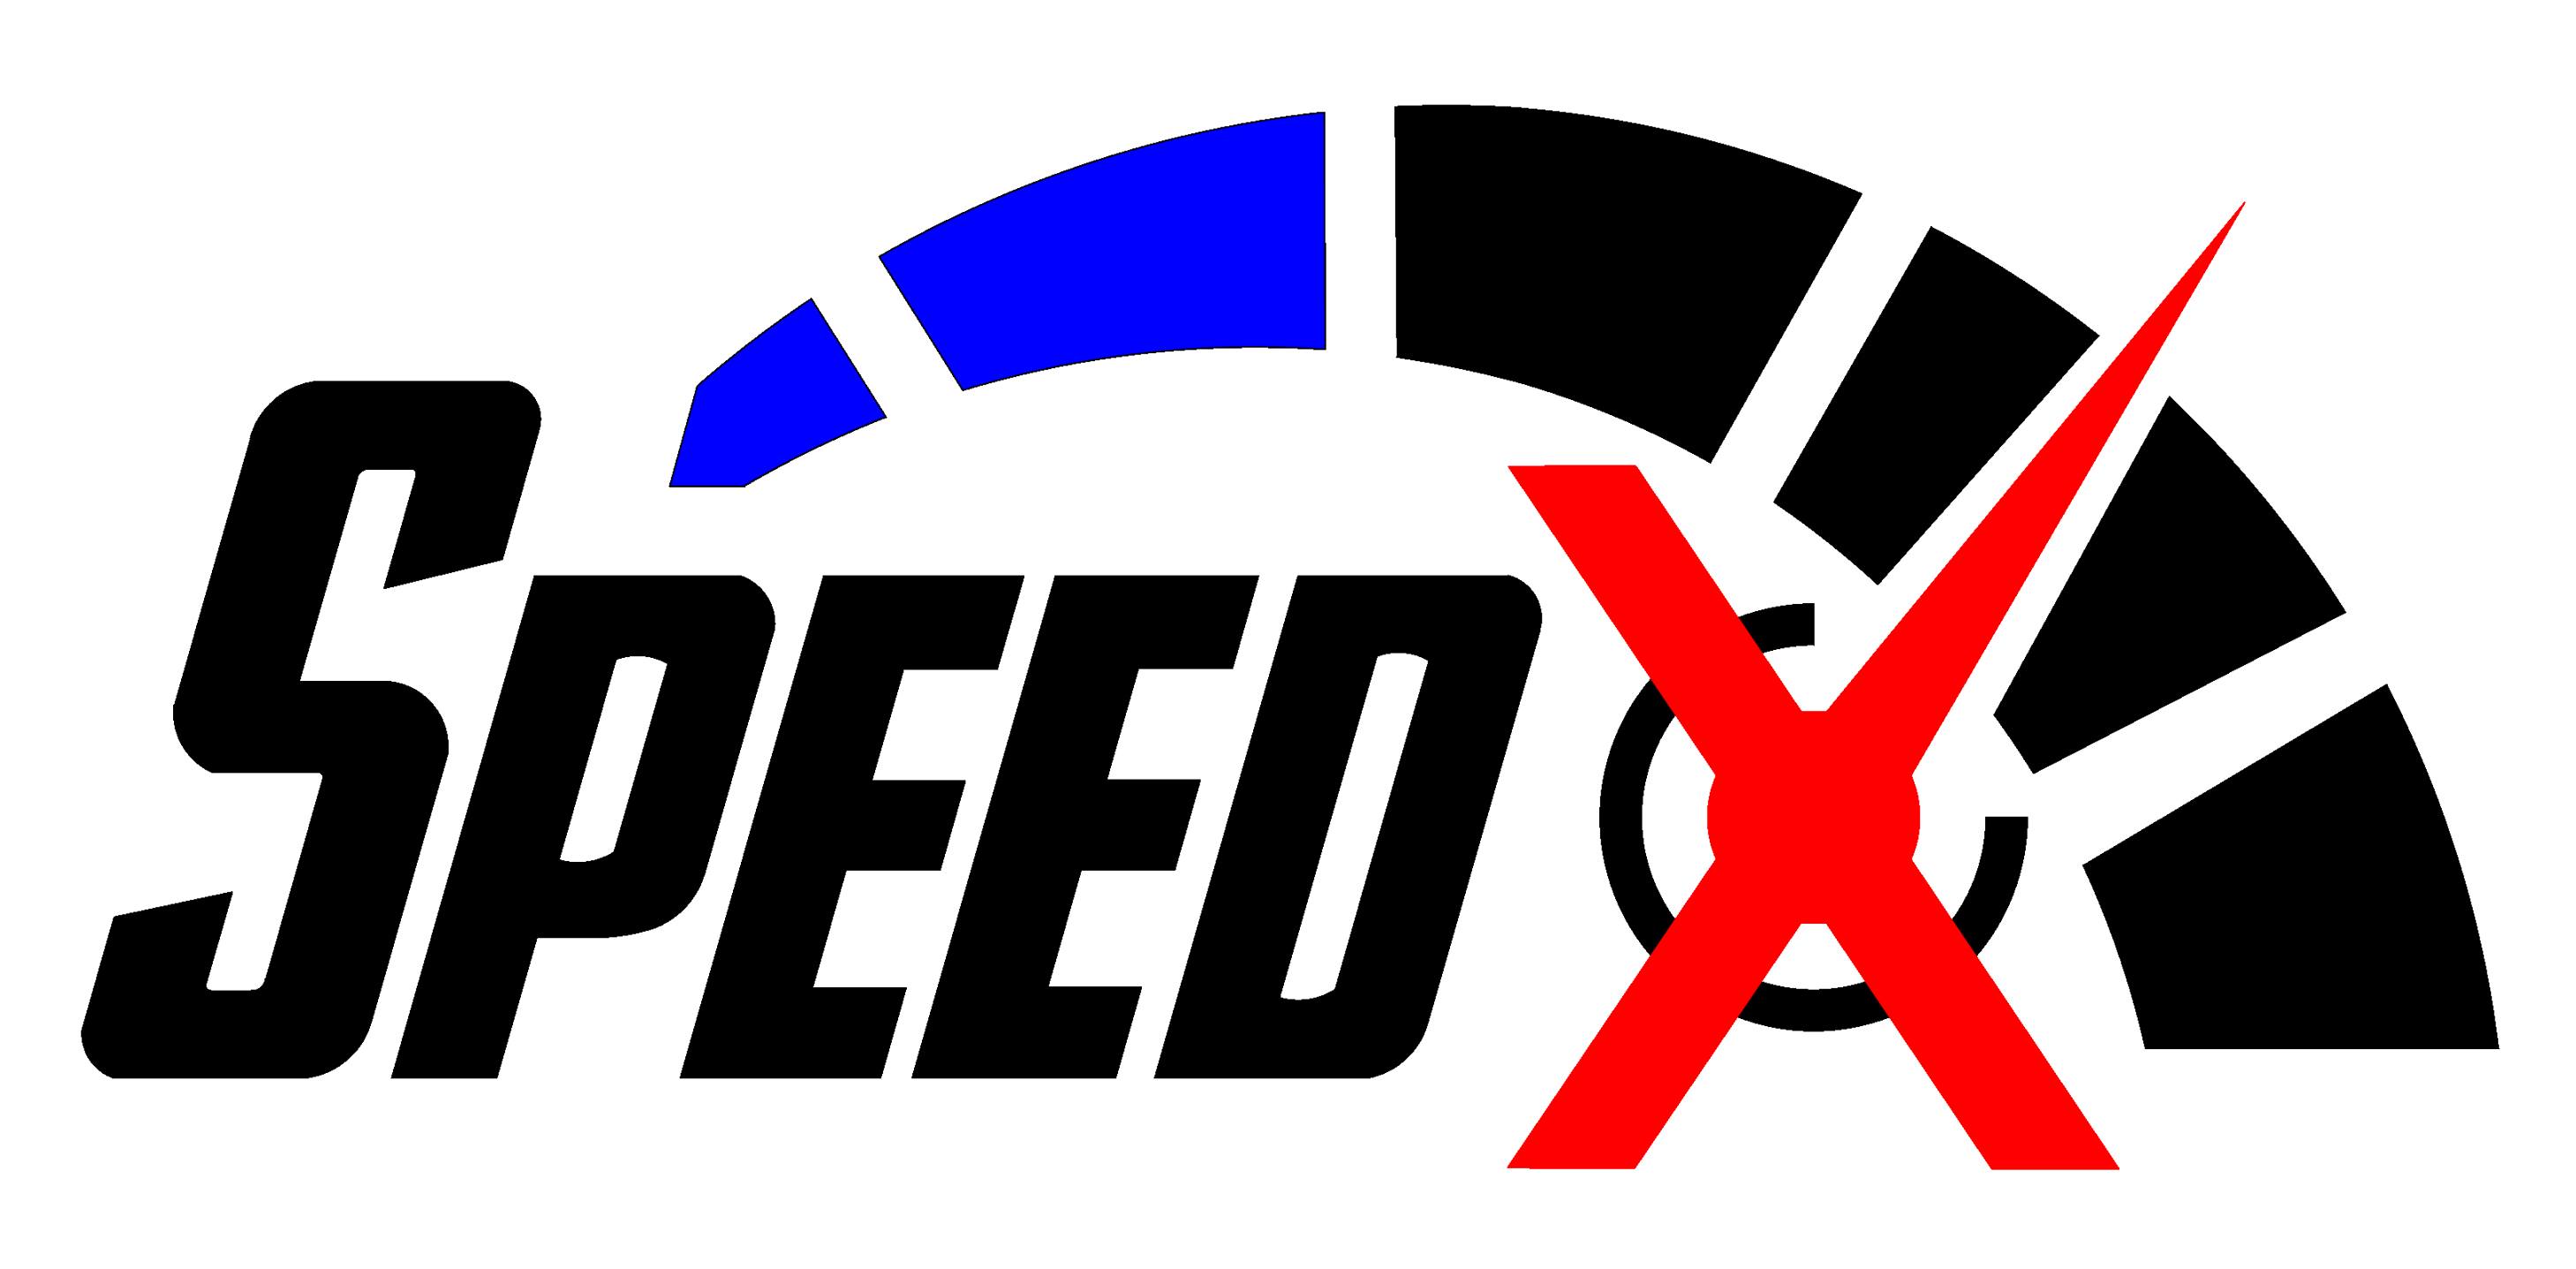 Speed X, LLC